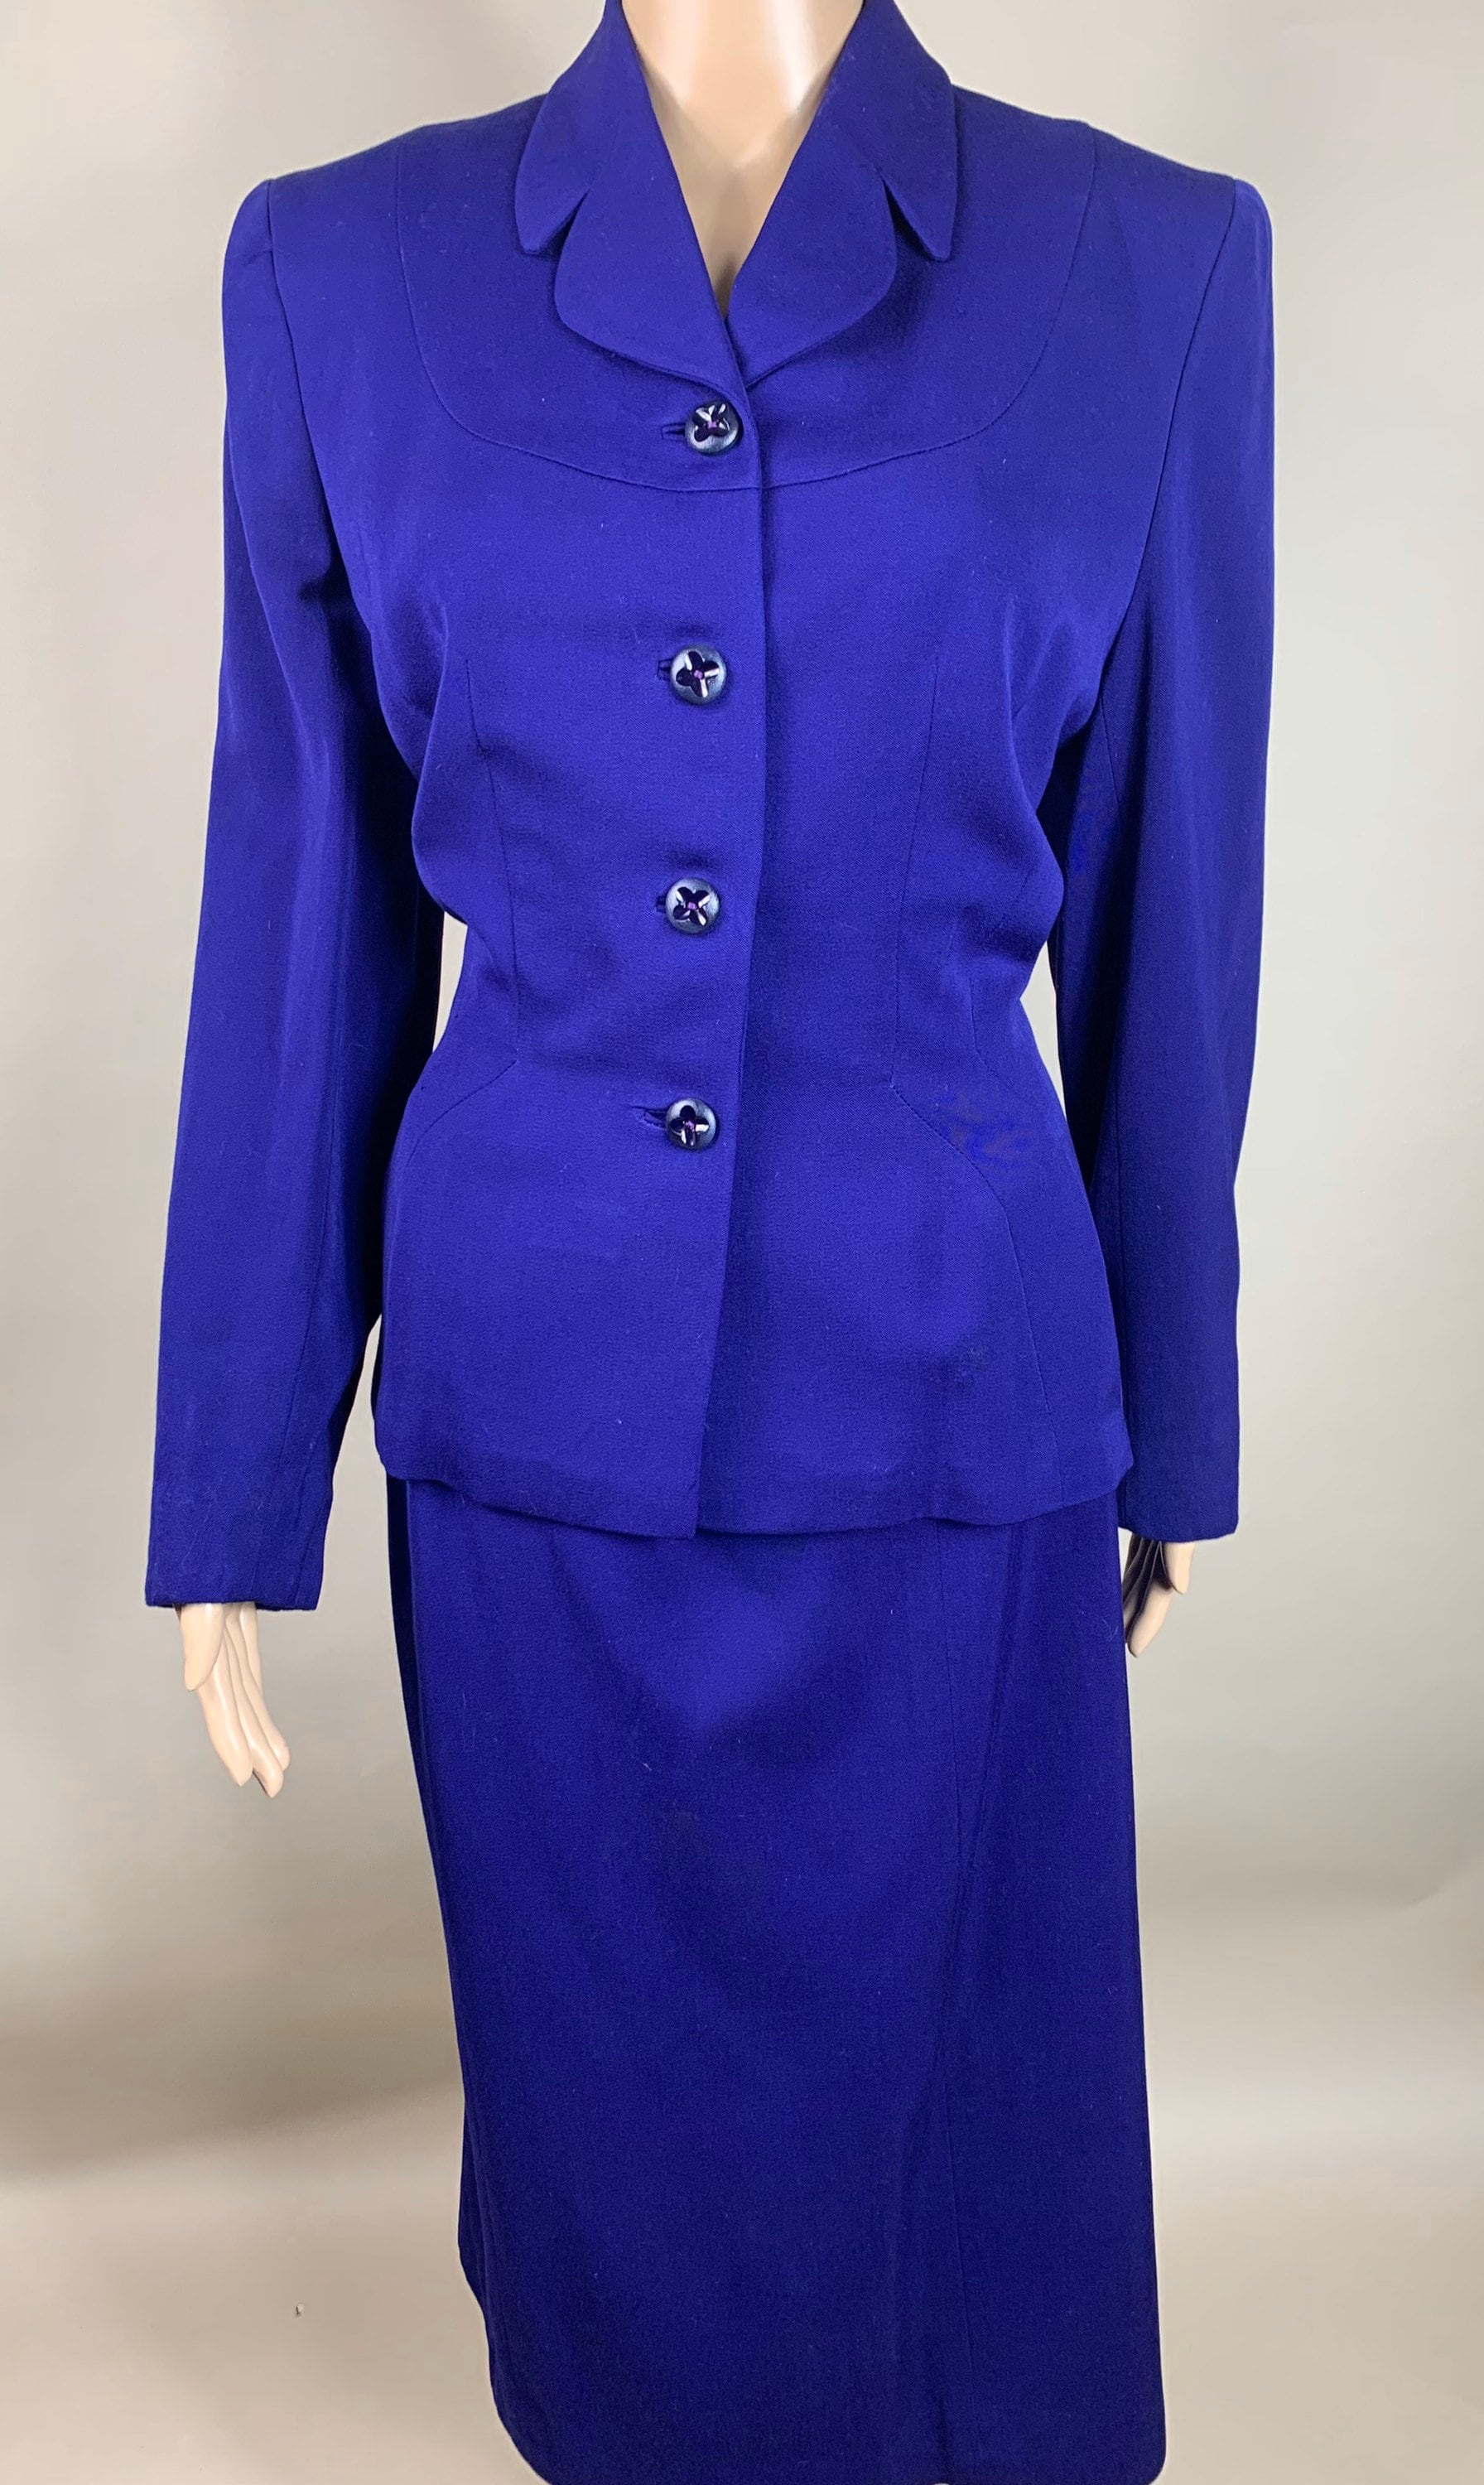 Vintage Late 1940s, Early 1950s Women’s Purple Blue Suit Large